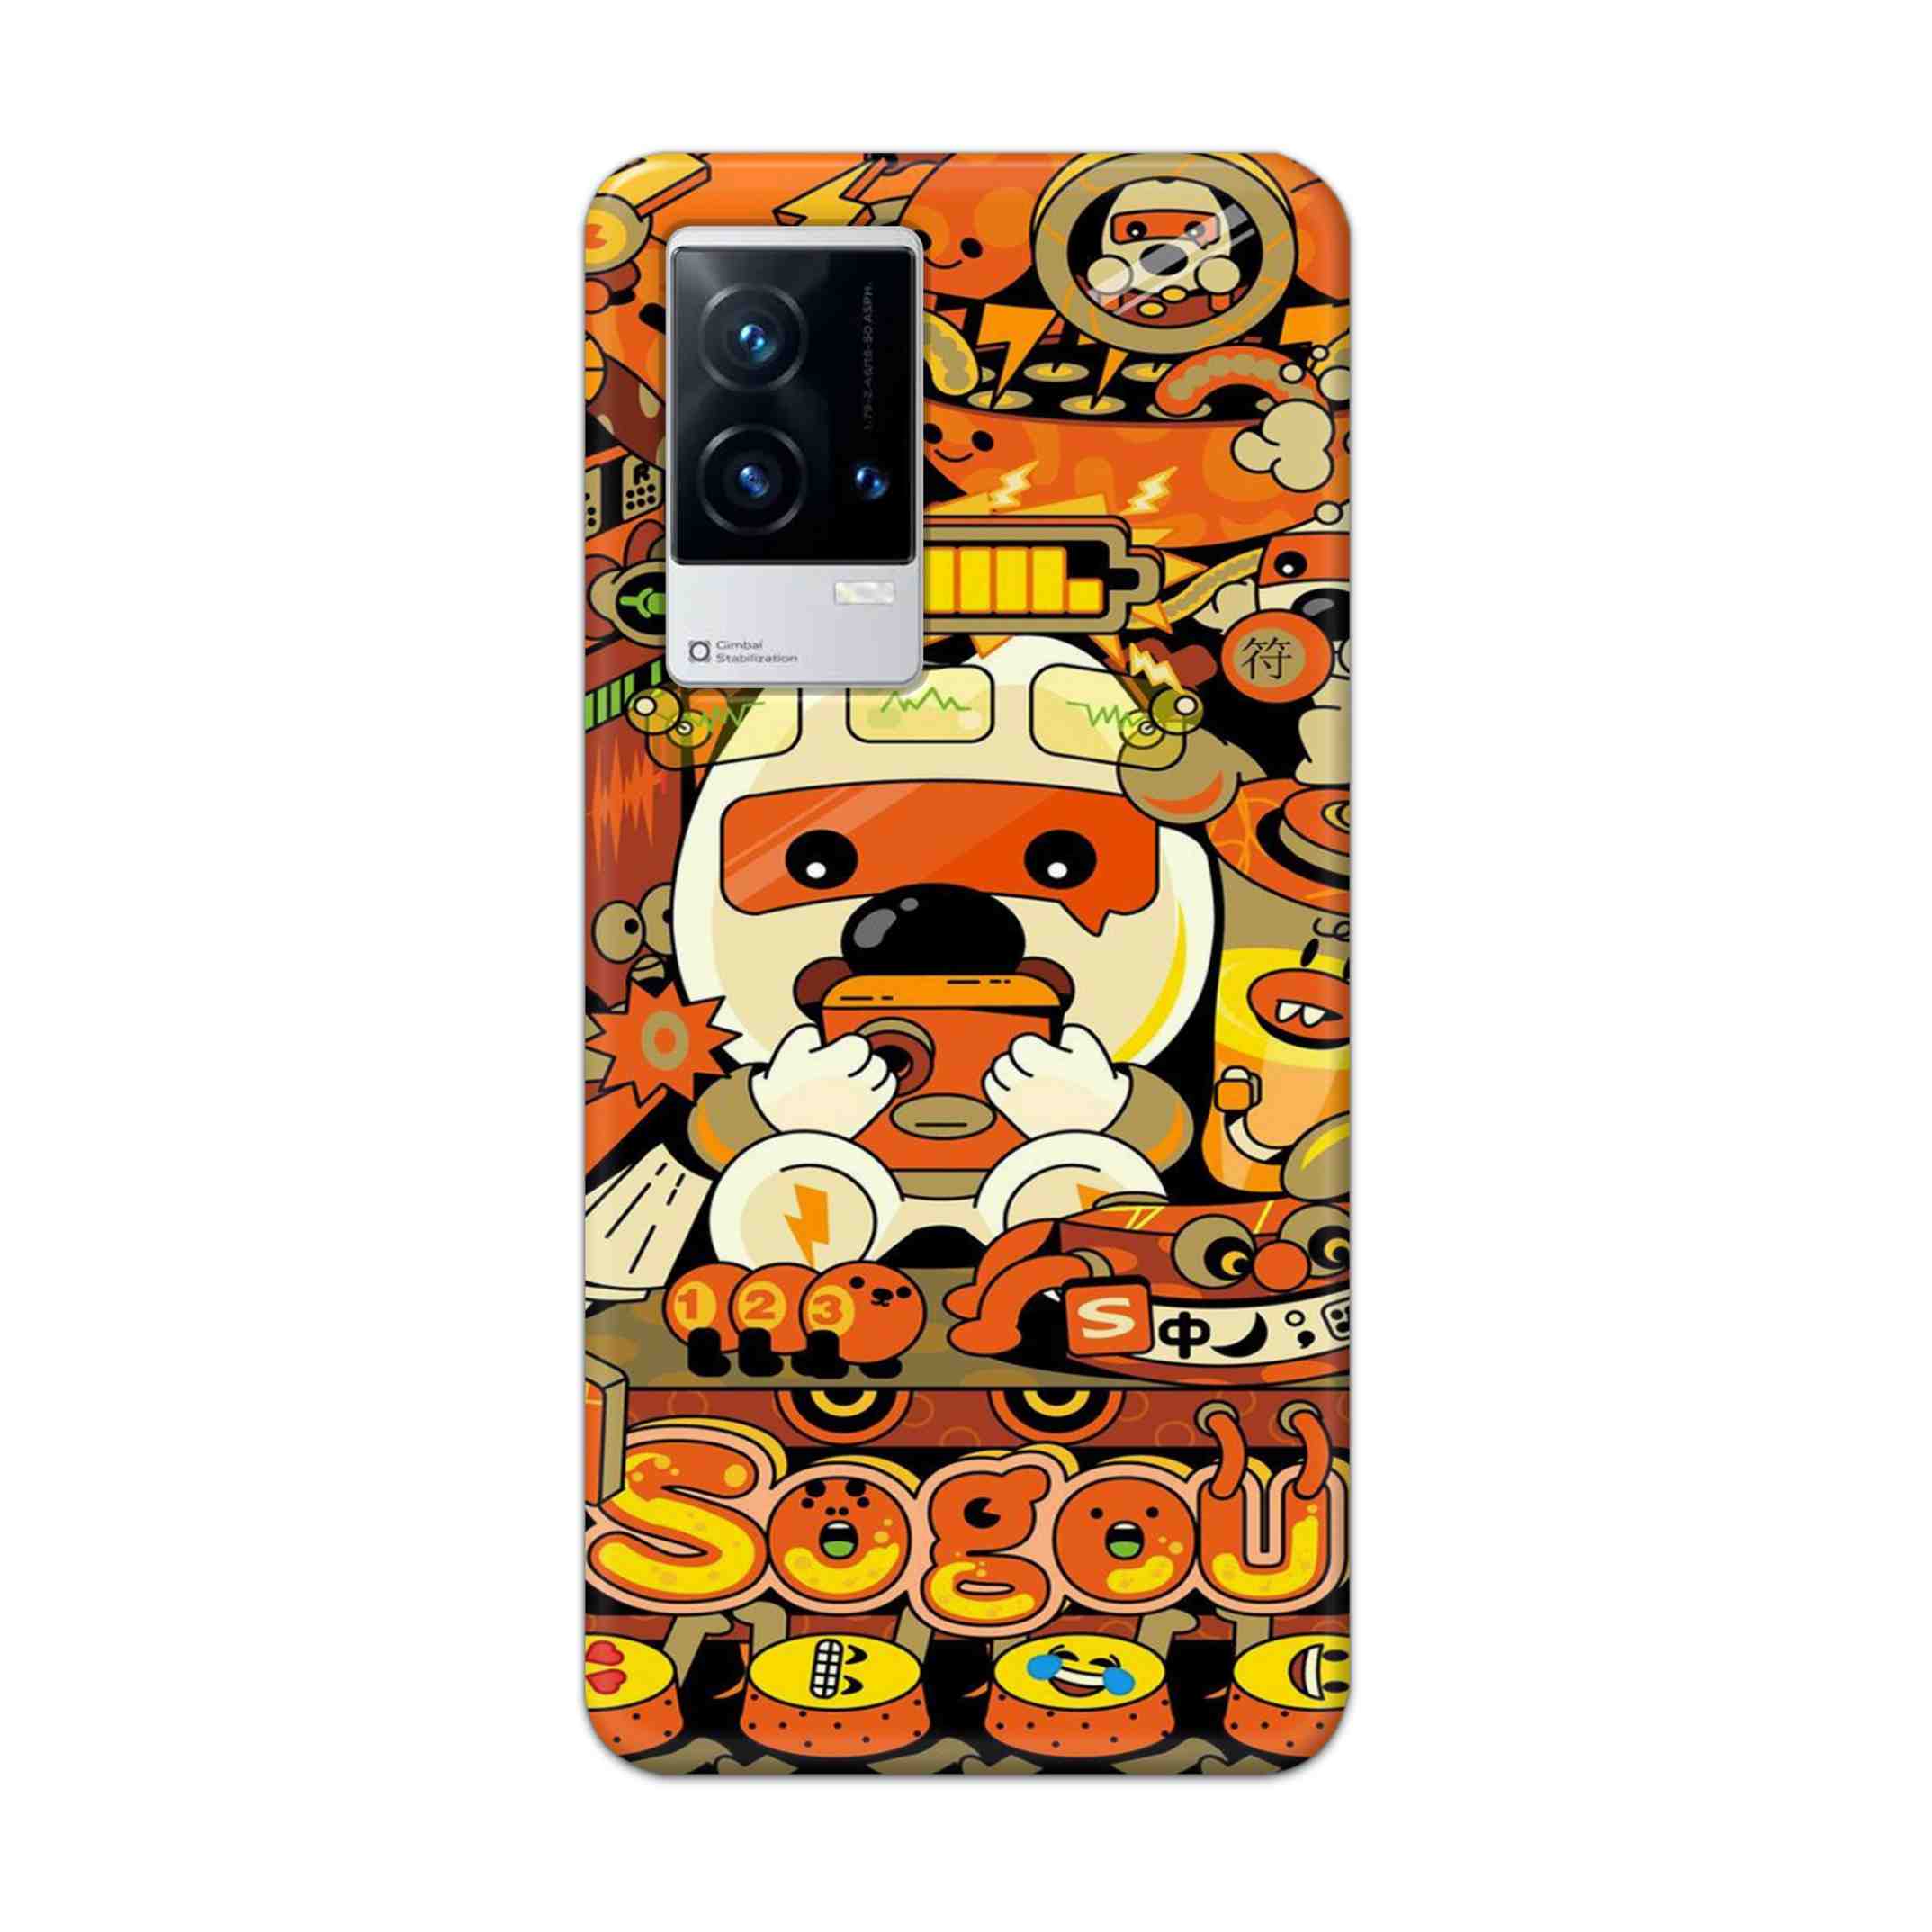 Buy Sogou Hard Back Mobile Phone Case Cover For Vivo iQOO 9 5G Online